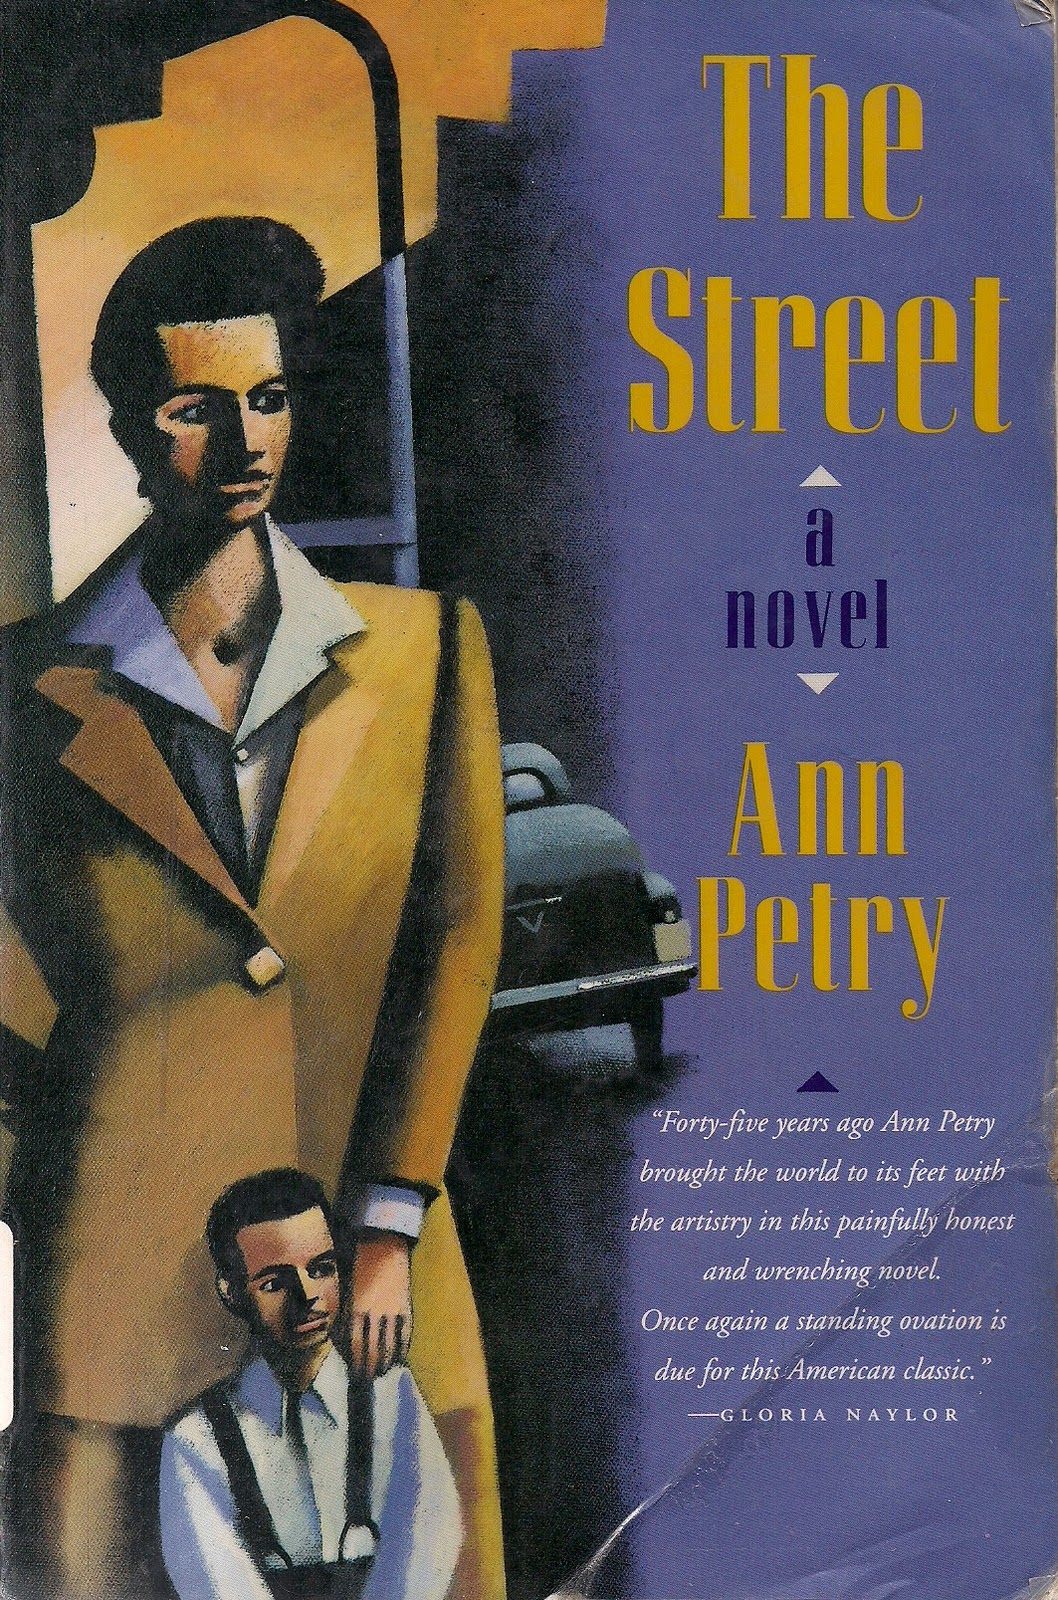 The-Street-Ann-Petry